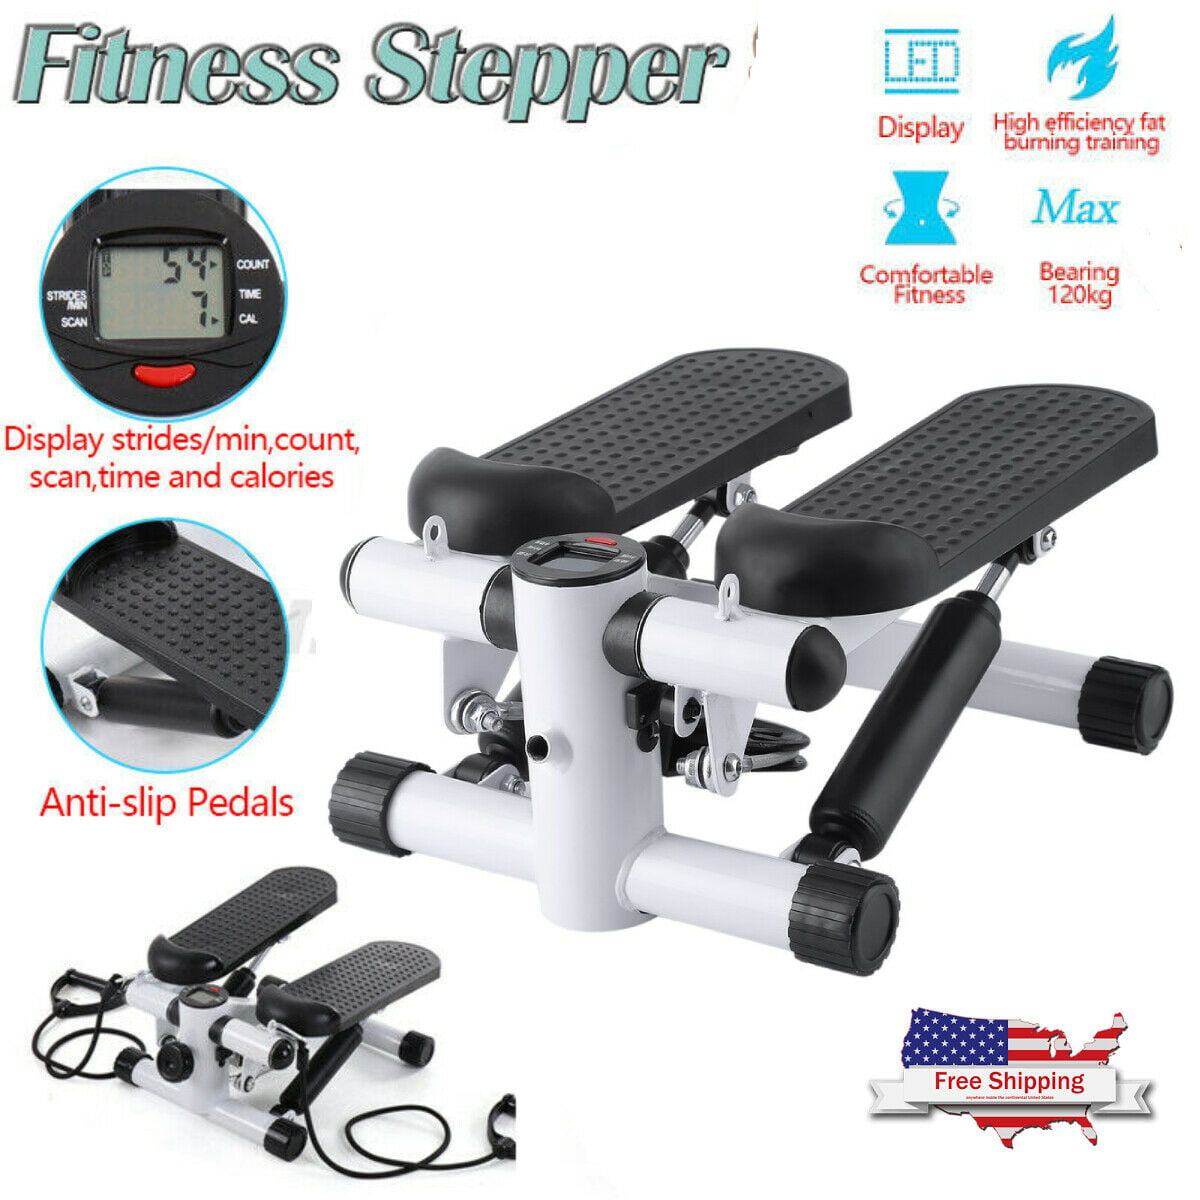 Mini Fitness Air Climber Stair Stepper Aerobic Stepp Machine W/Resistance Bands 